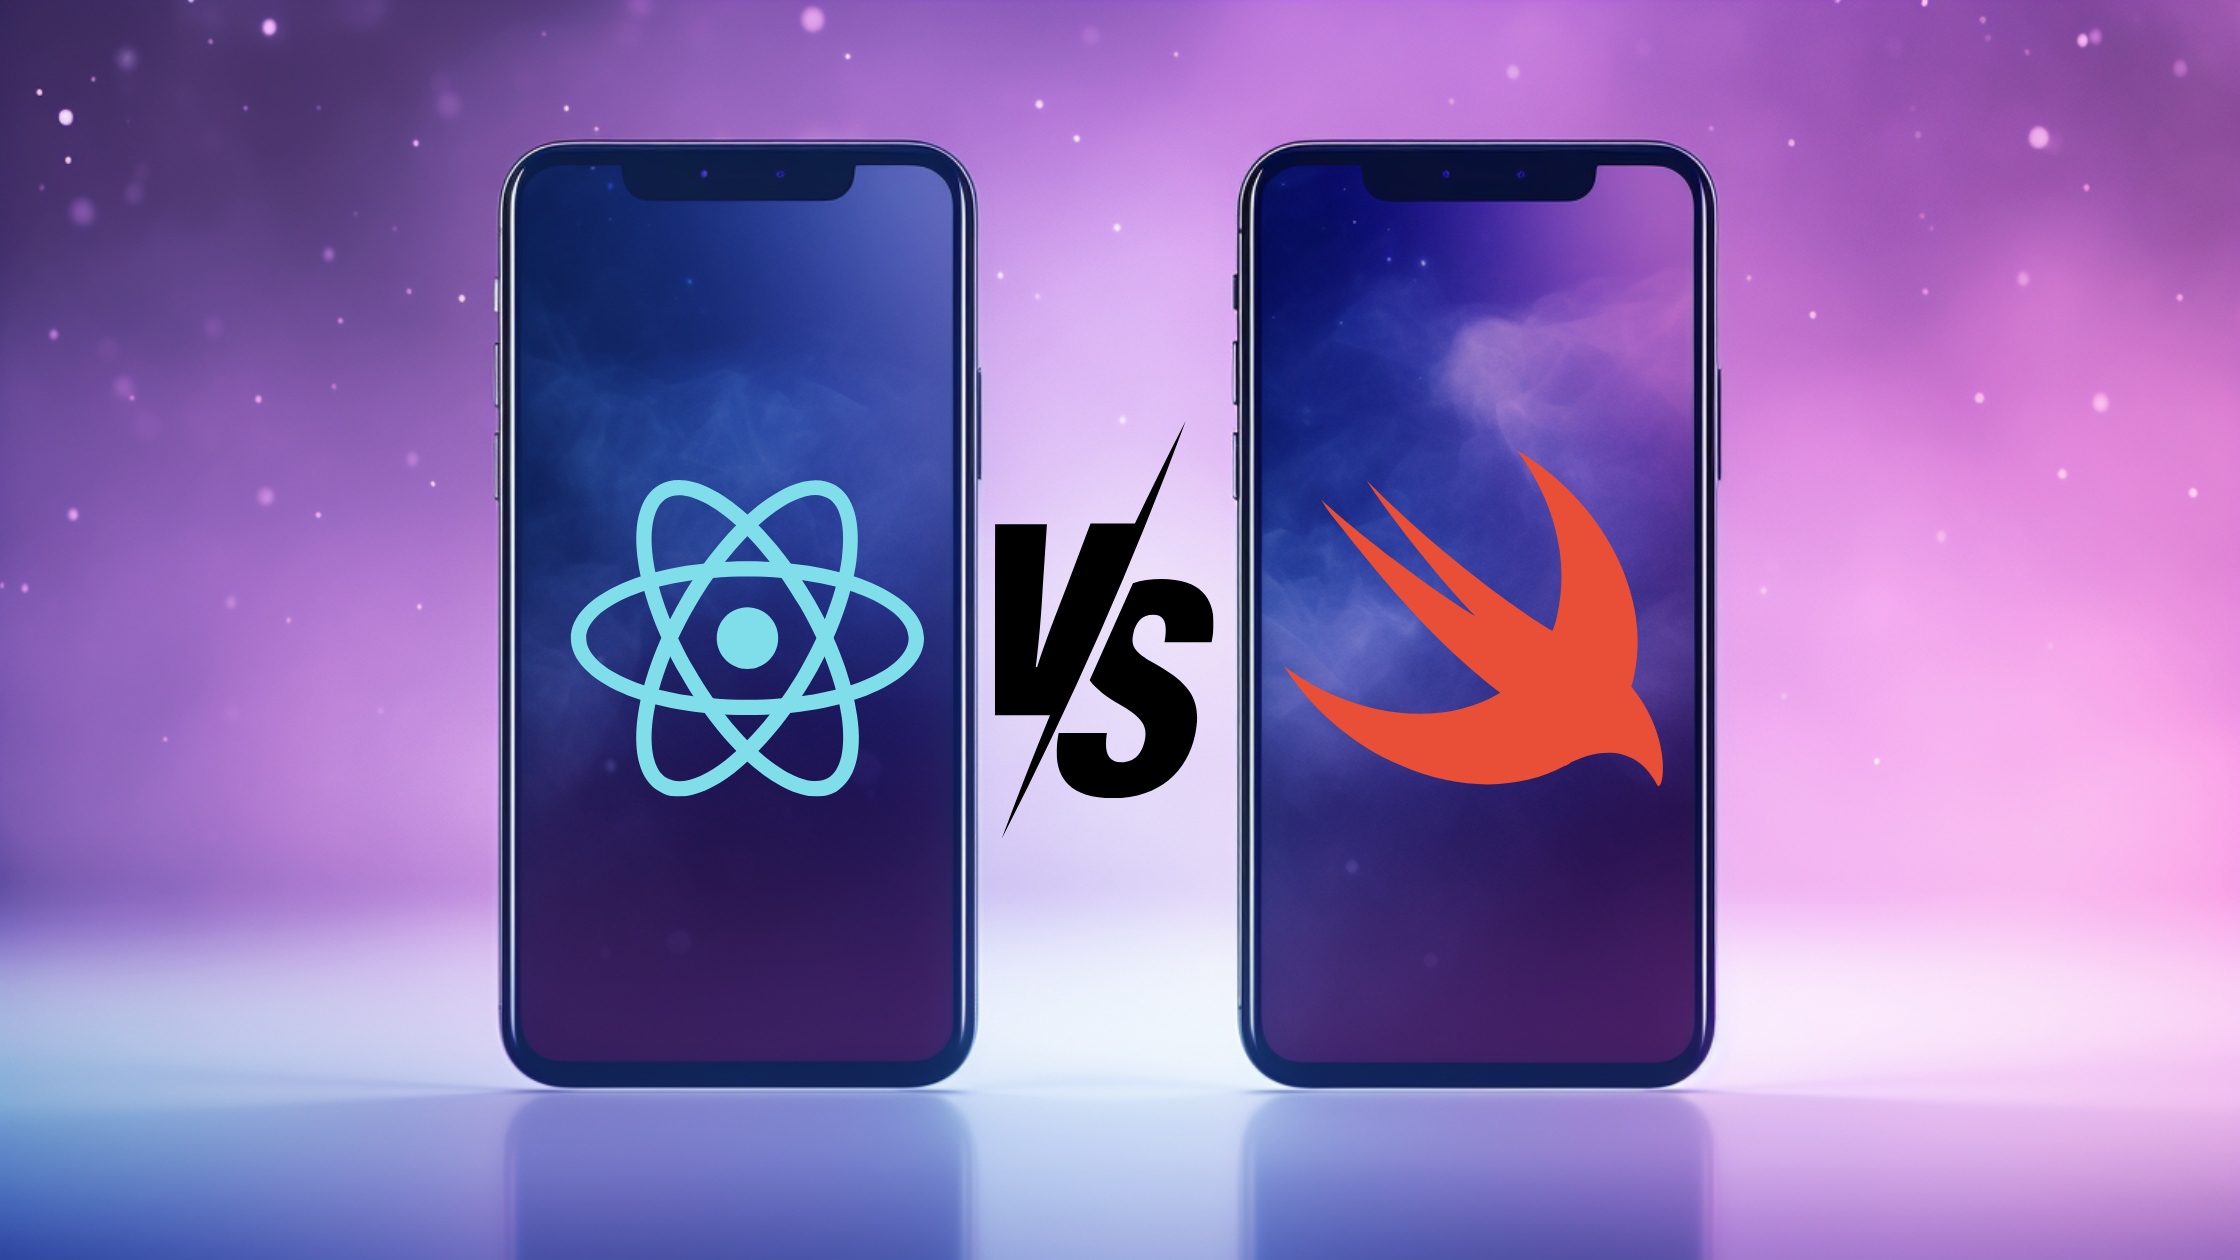  React Native vs Swift for iOS Development